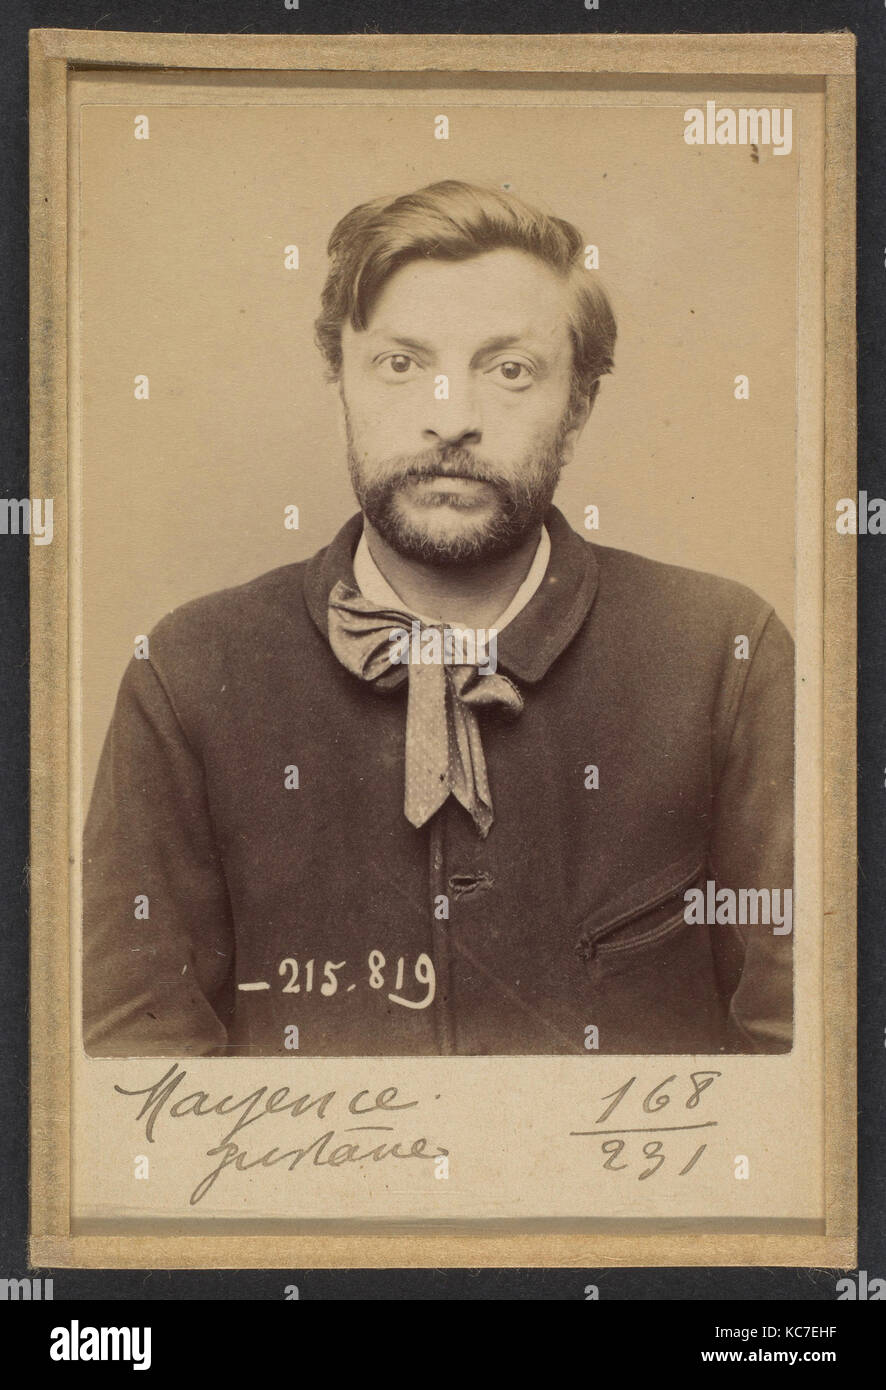 Mayence. Gustave, David. 33 ans, né le 29/5/60 à Paris XVllle. Tapissier. Anarchiste. 17/3/94., Alphonse Bertillon, 1894 Stock Photo